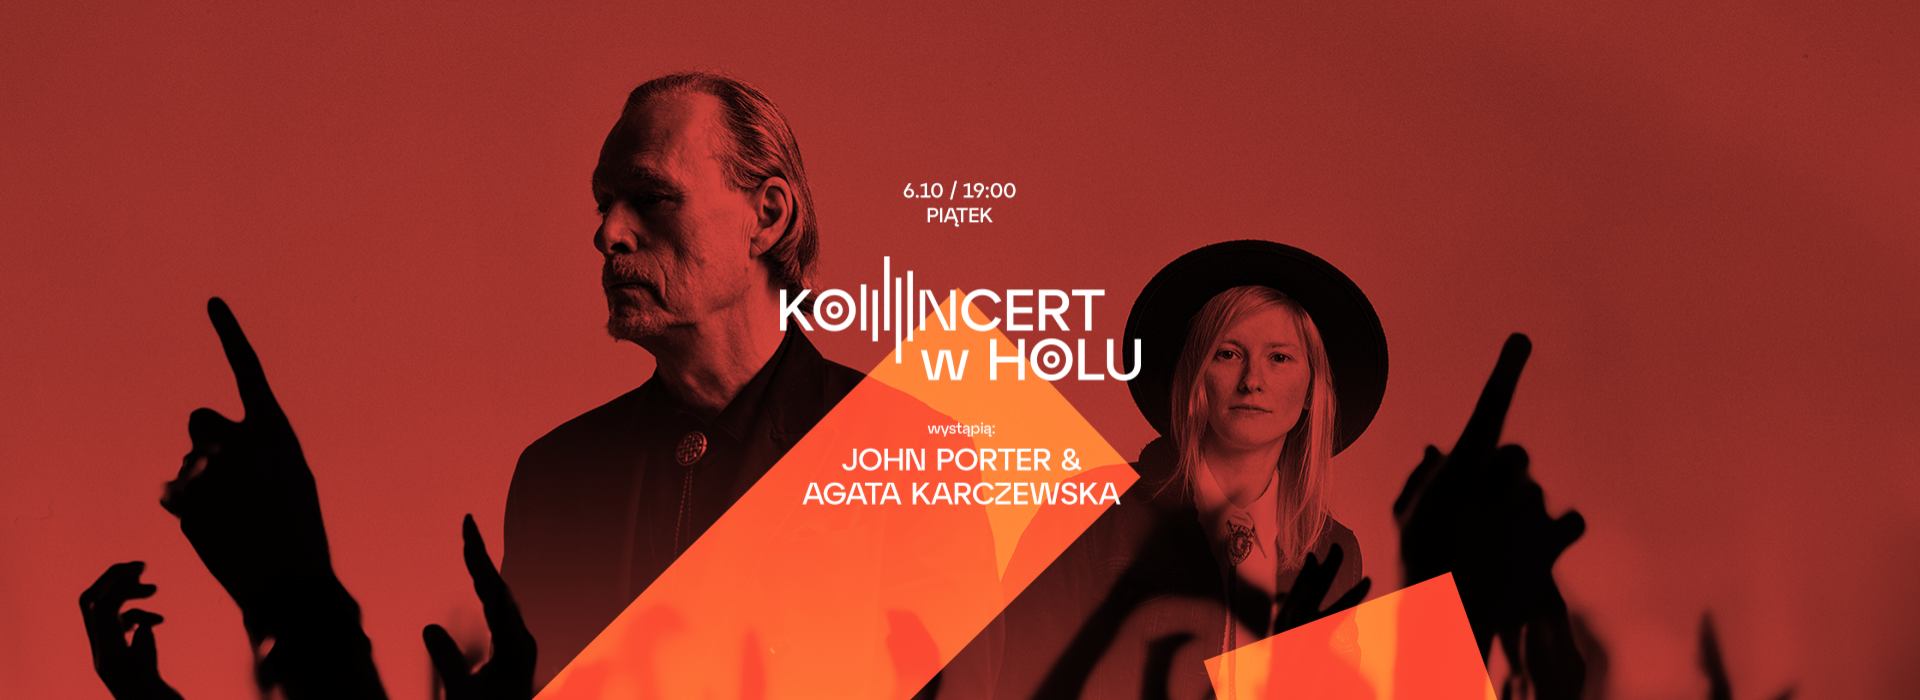 Koncert w Holu: John Porter & Agata Karczewska